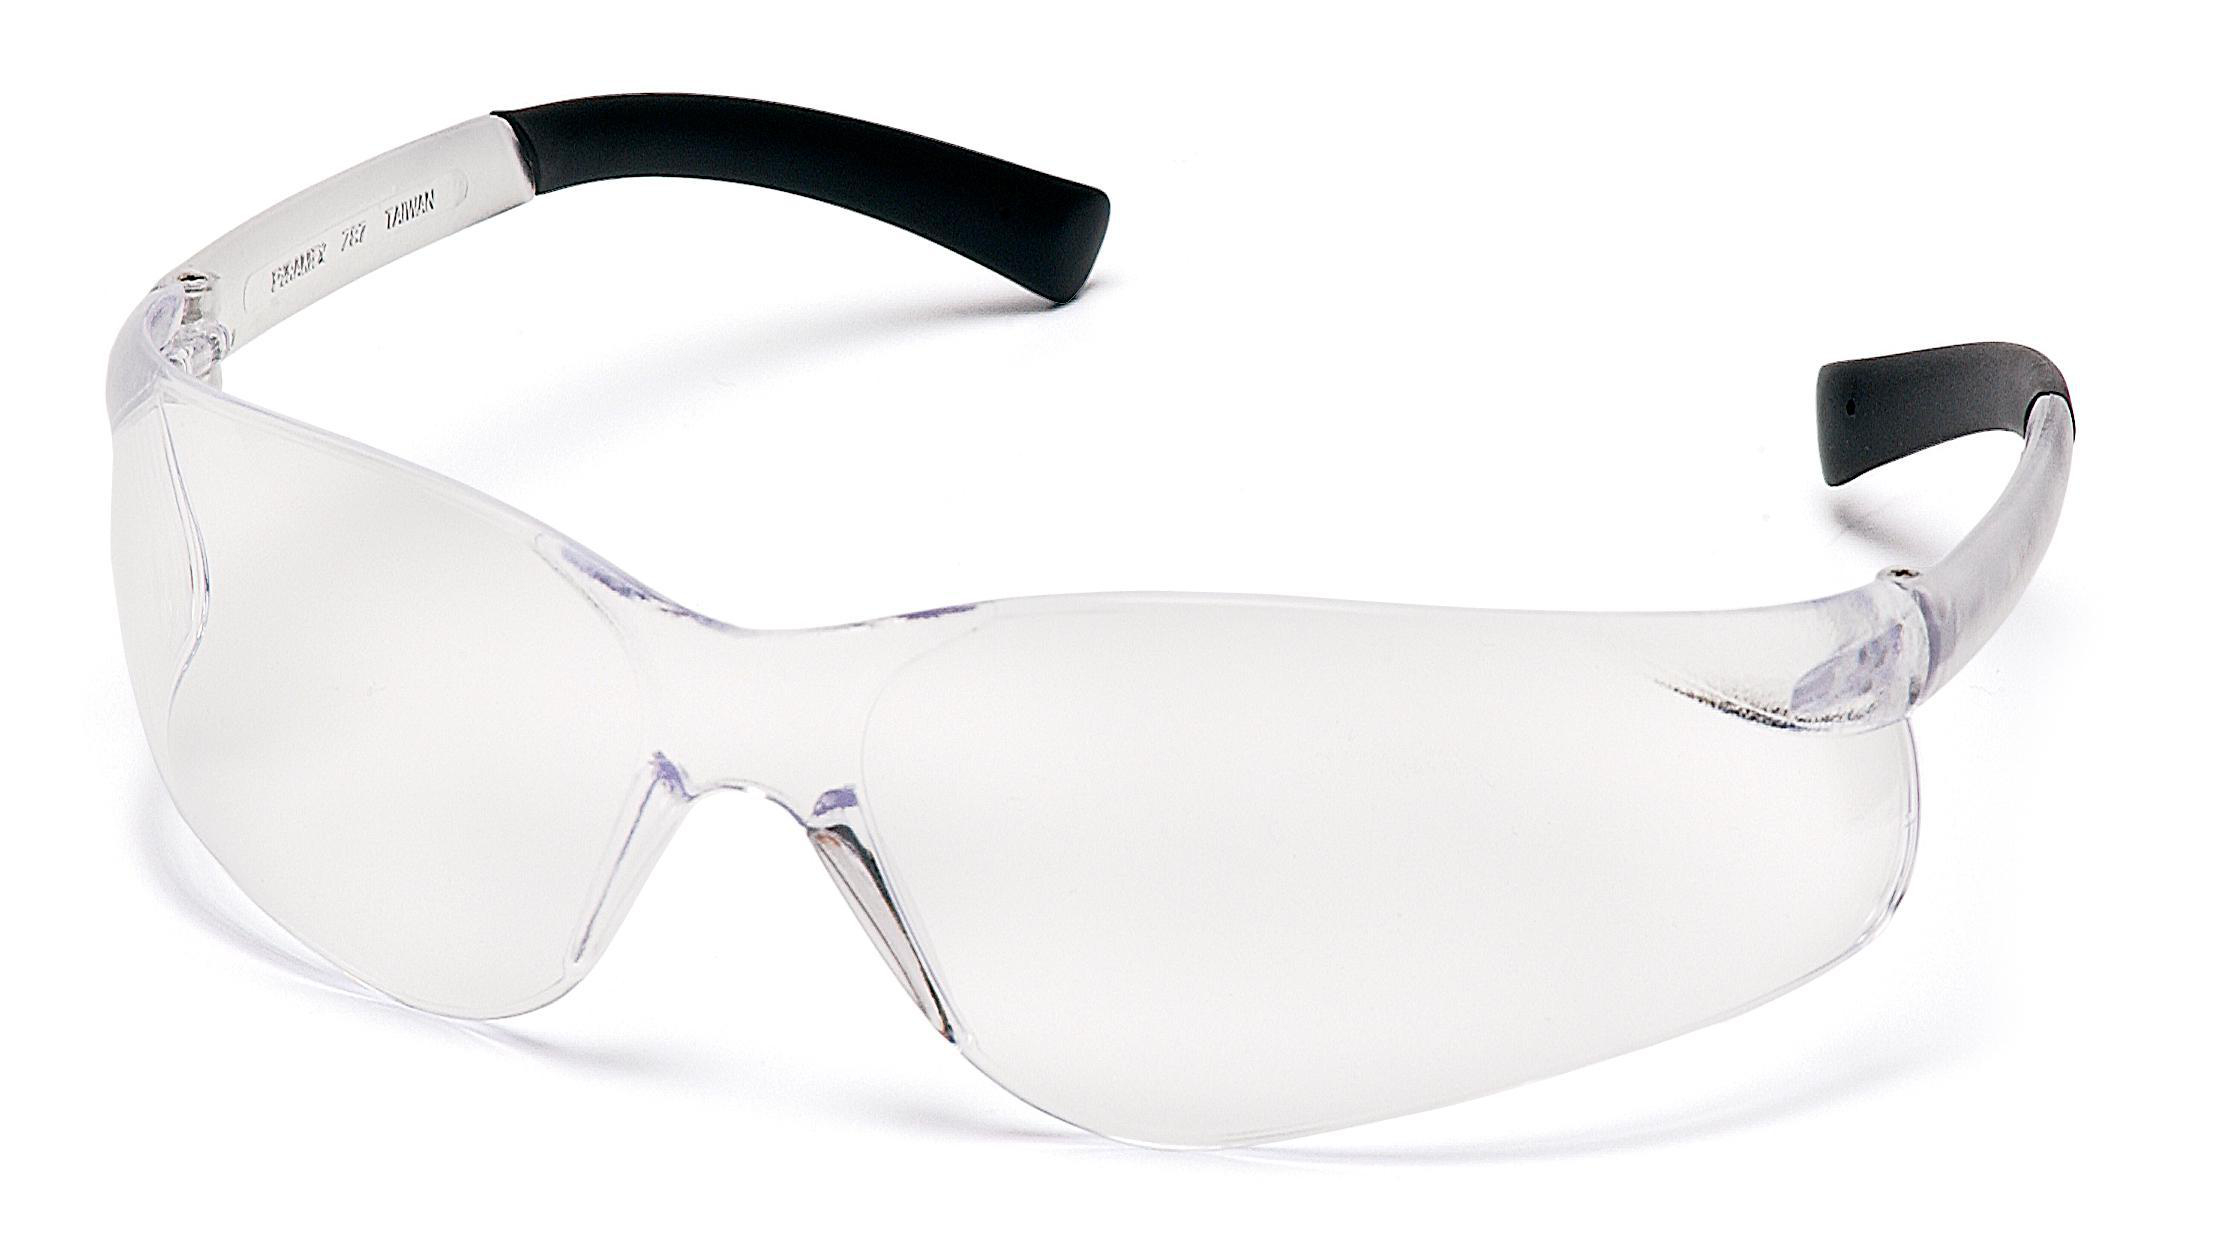 Edge Safety Glasses Brazeau Patriot Smoke Lens Black FREE SHIPPING!